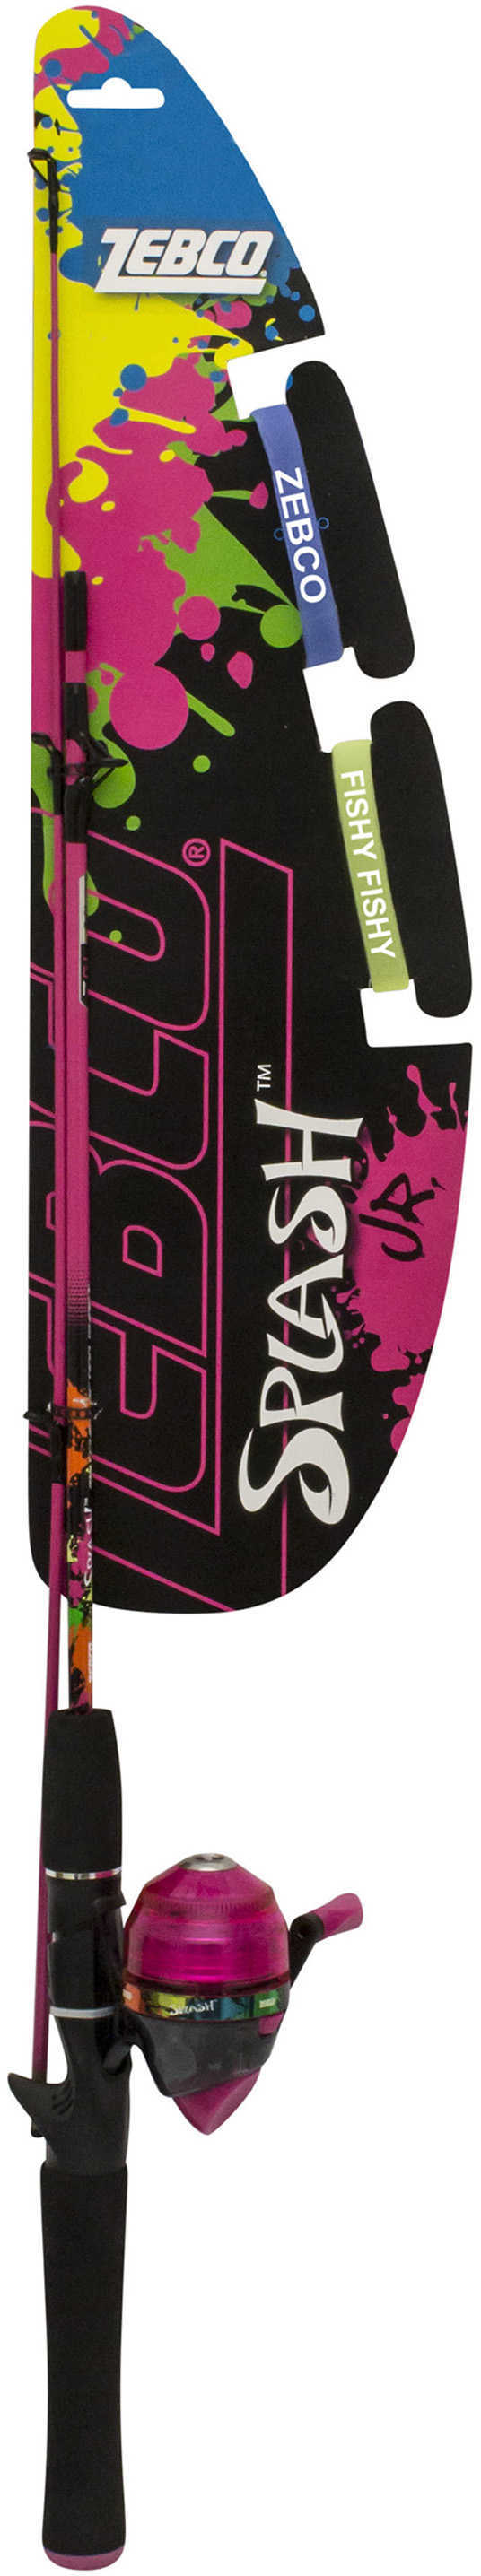 Zebco Splash Kids Junior Girl  402 SC 2PC Combo - Pink